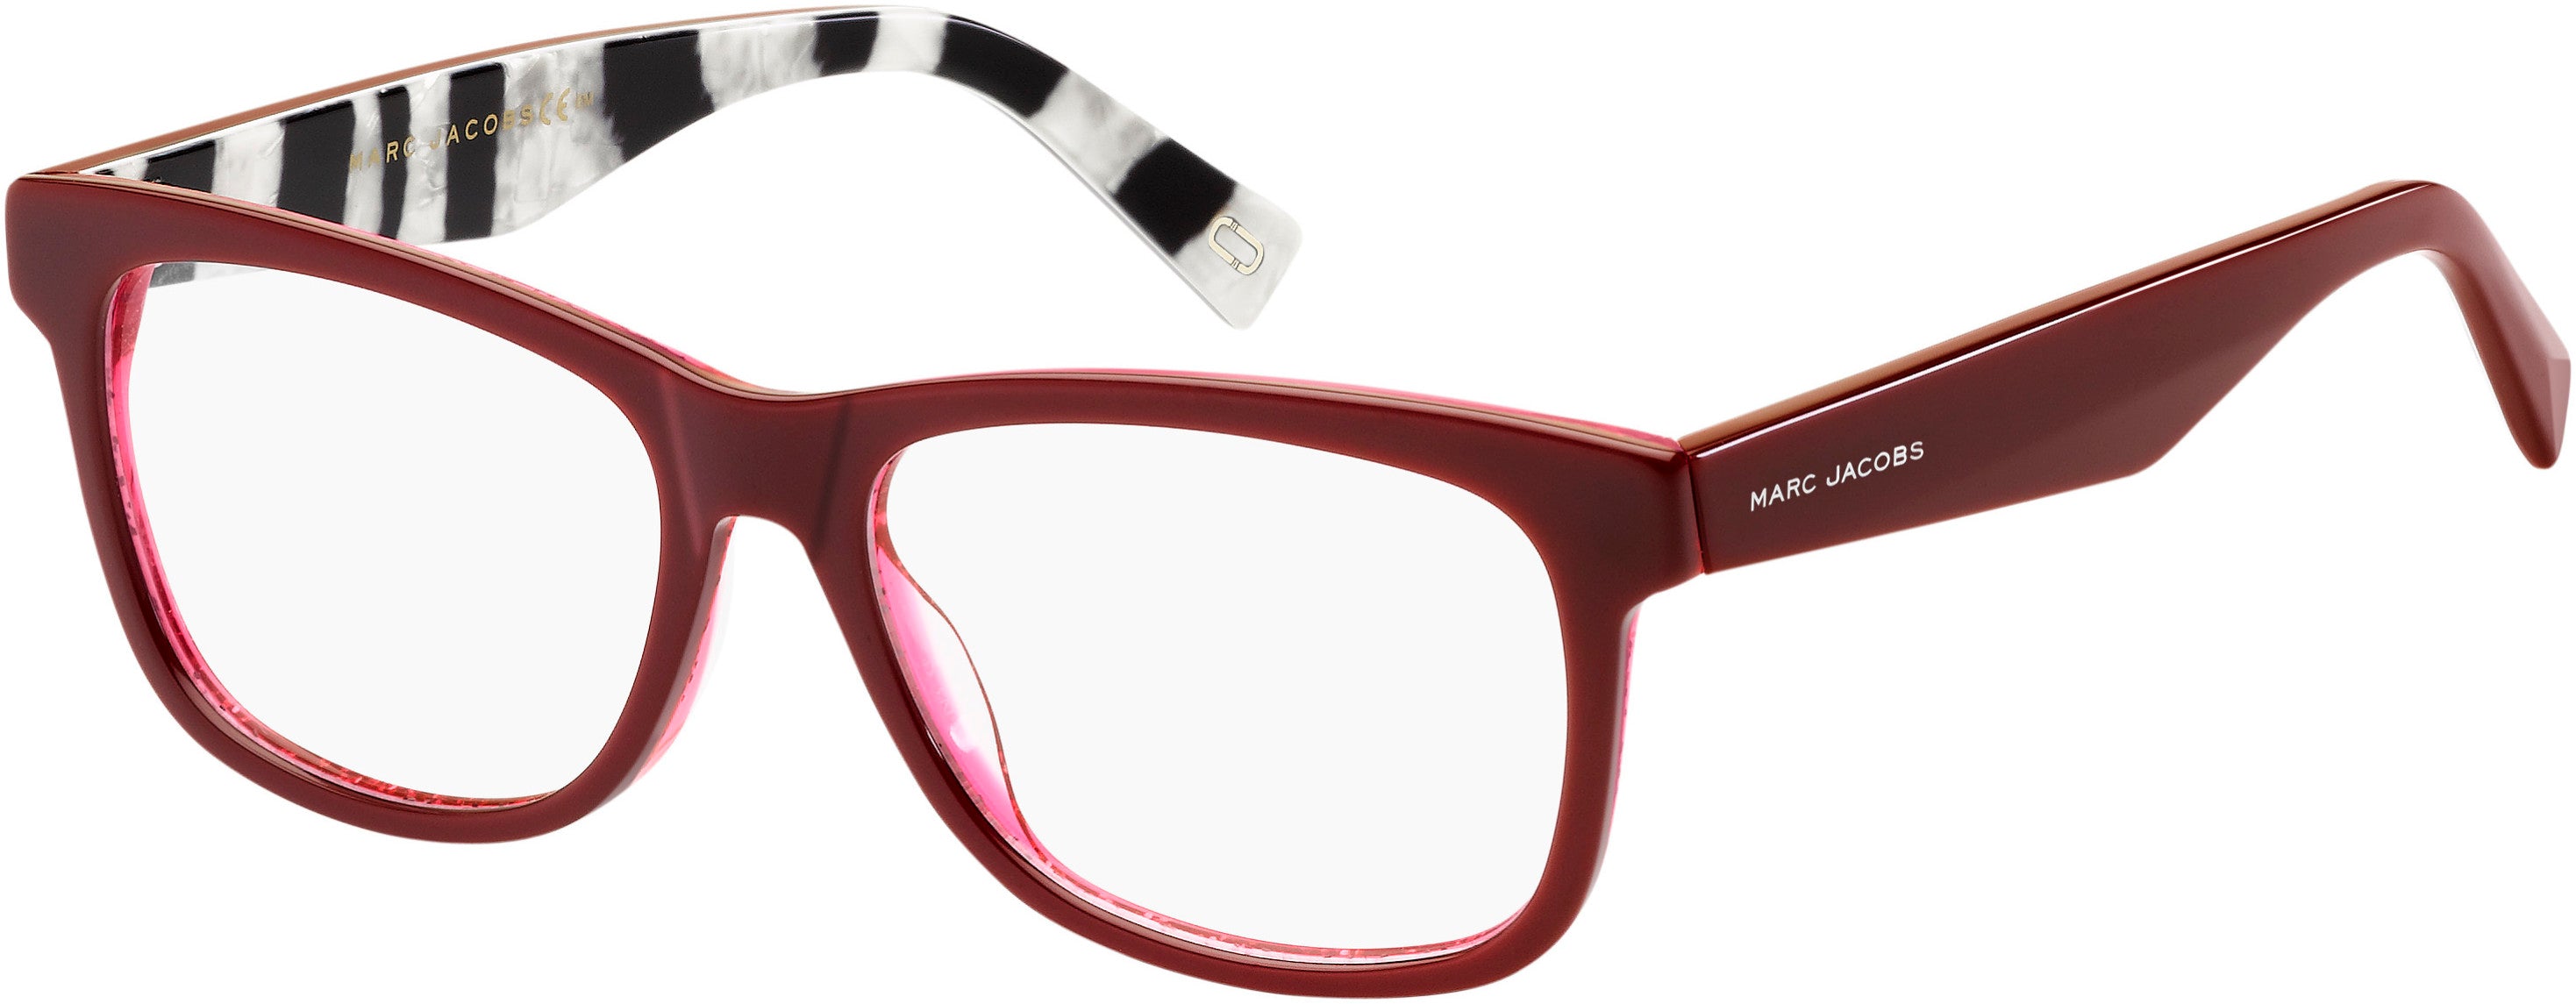 Marc Jacobs Marc 235 Rectangular Eyeglasses 0OSW-0OSW  Bu Glitterfchs (00 Demo Lens)